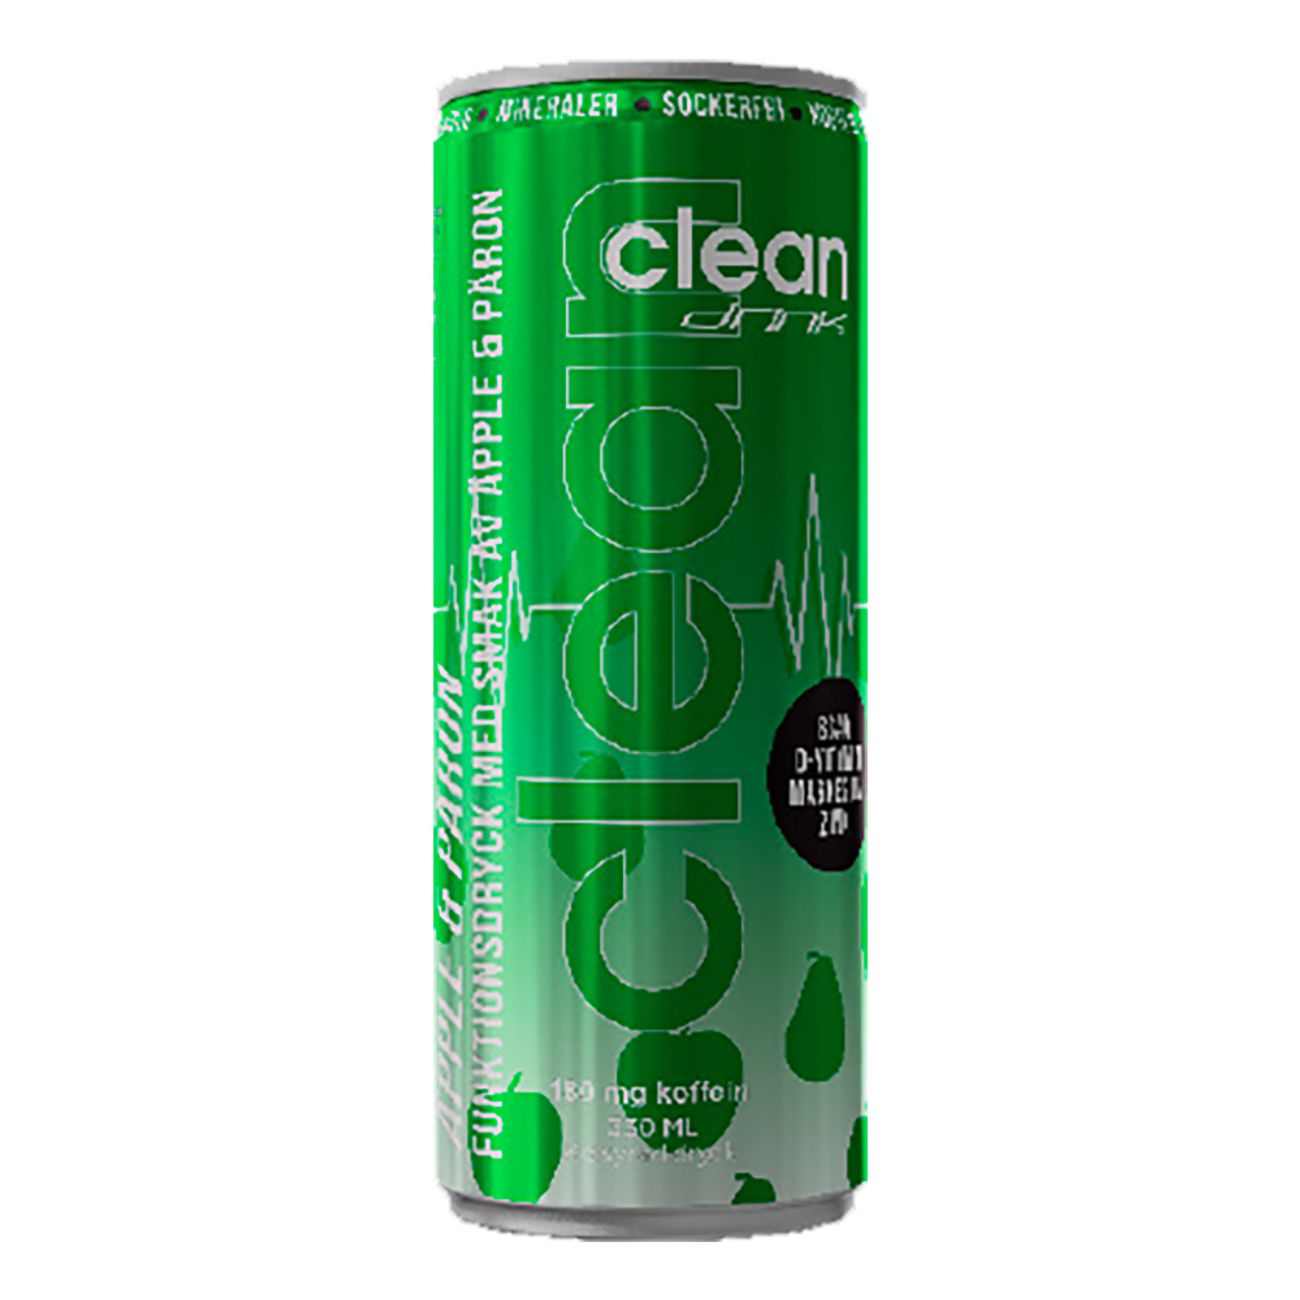 clean-drink-appleparon-82507-1